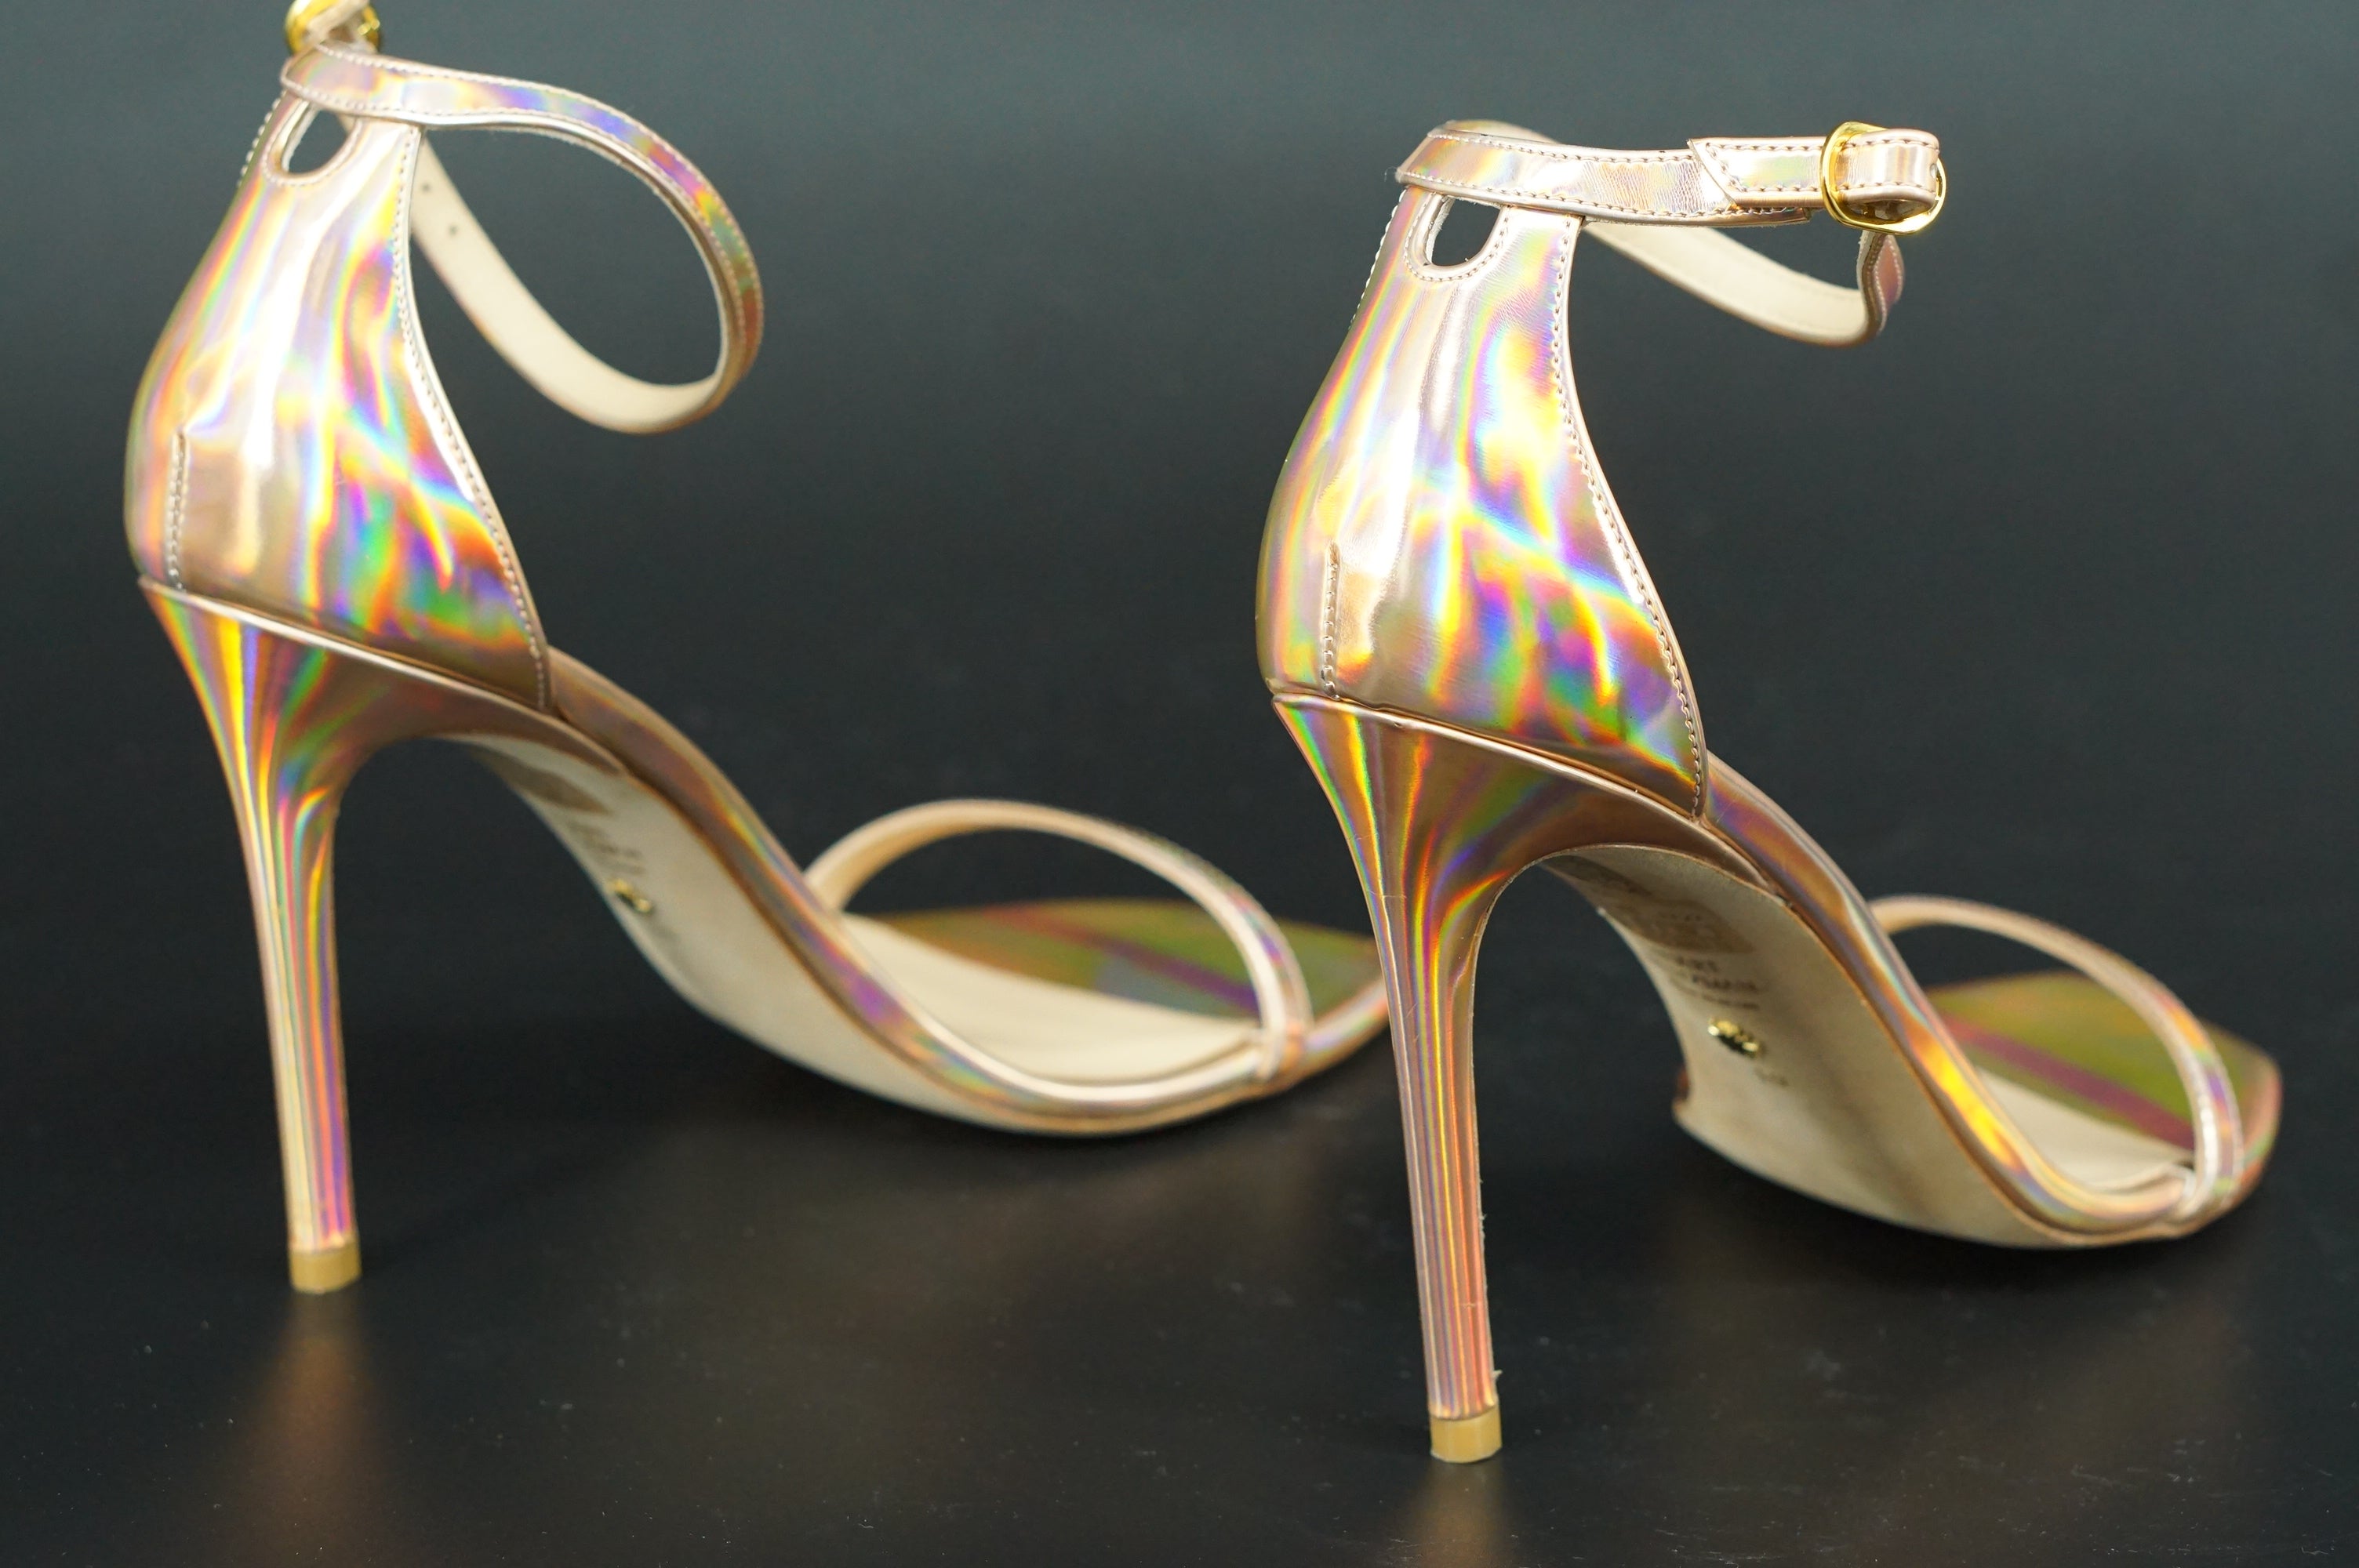 Stuart Weitzman Nudistcurve 100 Hologram Ankle Strappy Sandals Size 10 $475 pink